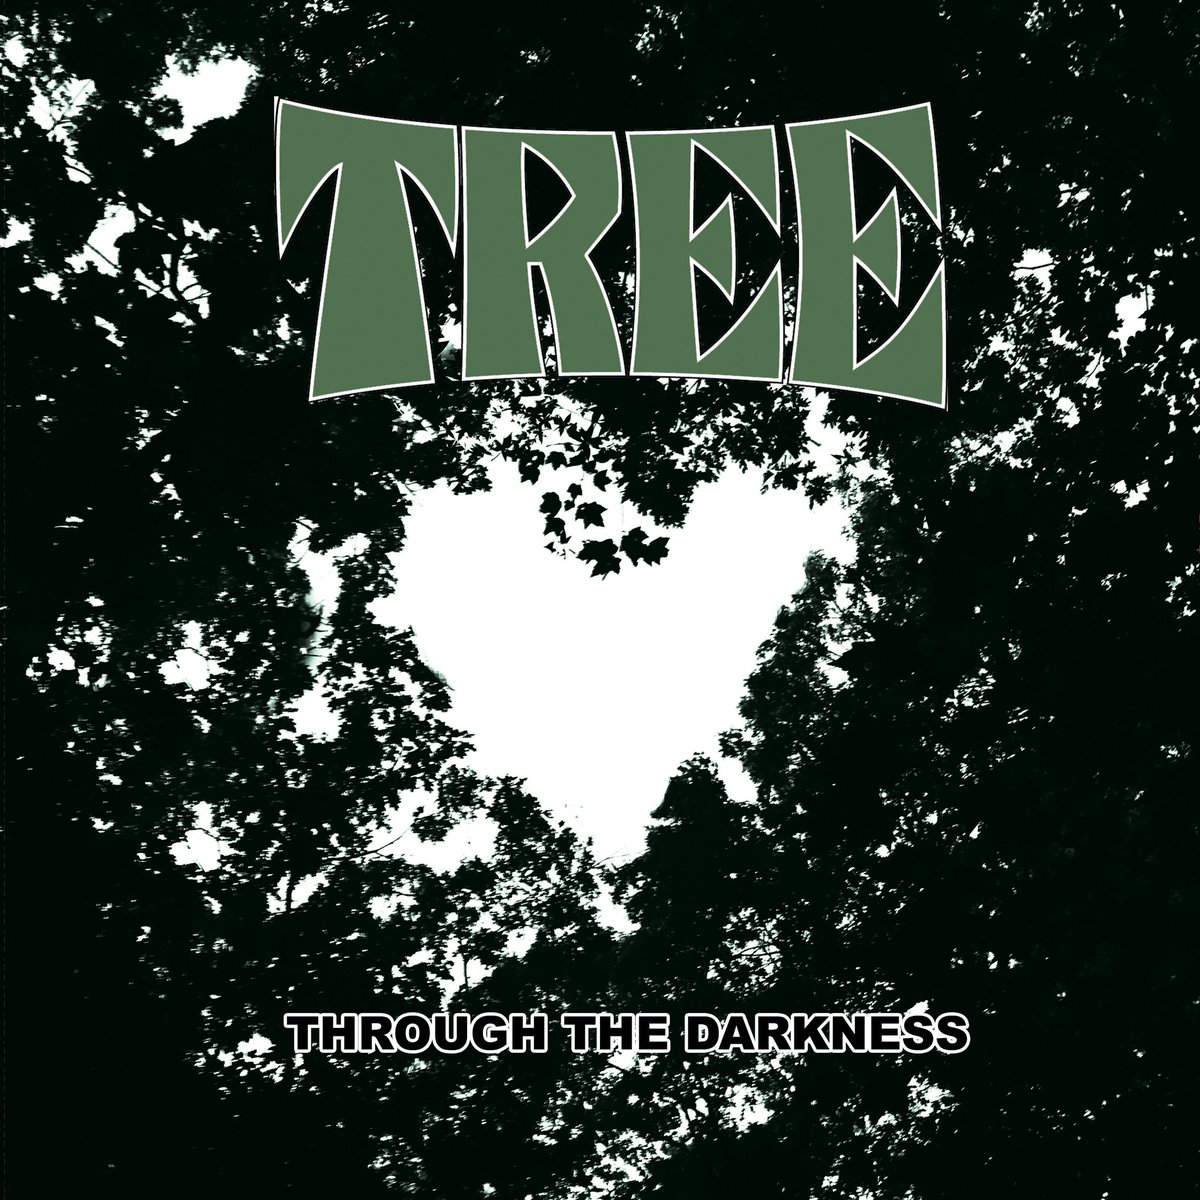 TREE- new record “Through The Darkness”
#new music alert #bostonpunk #punkhardcore #tree #punk#hxc #galaxyparkstudios #bostonmusic #newmusic #records 
youtube.com/watch?v=VKjTlL…